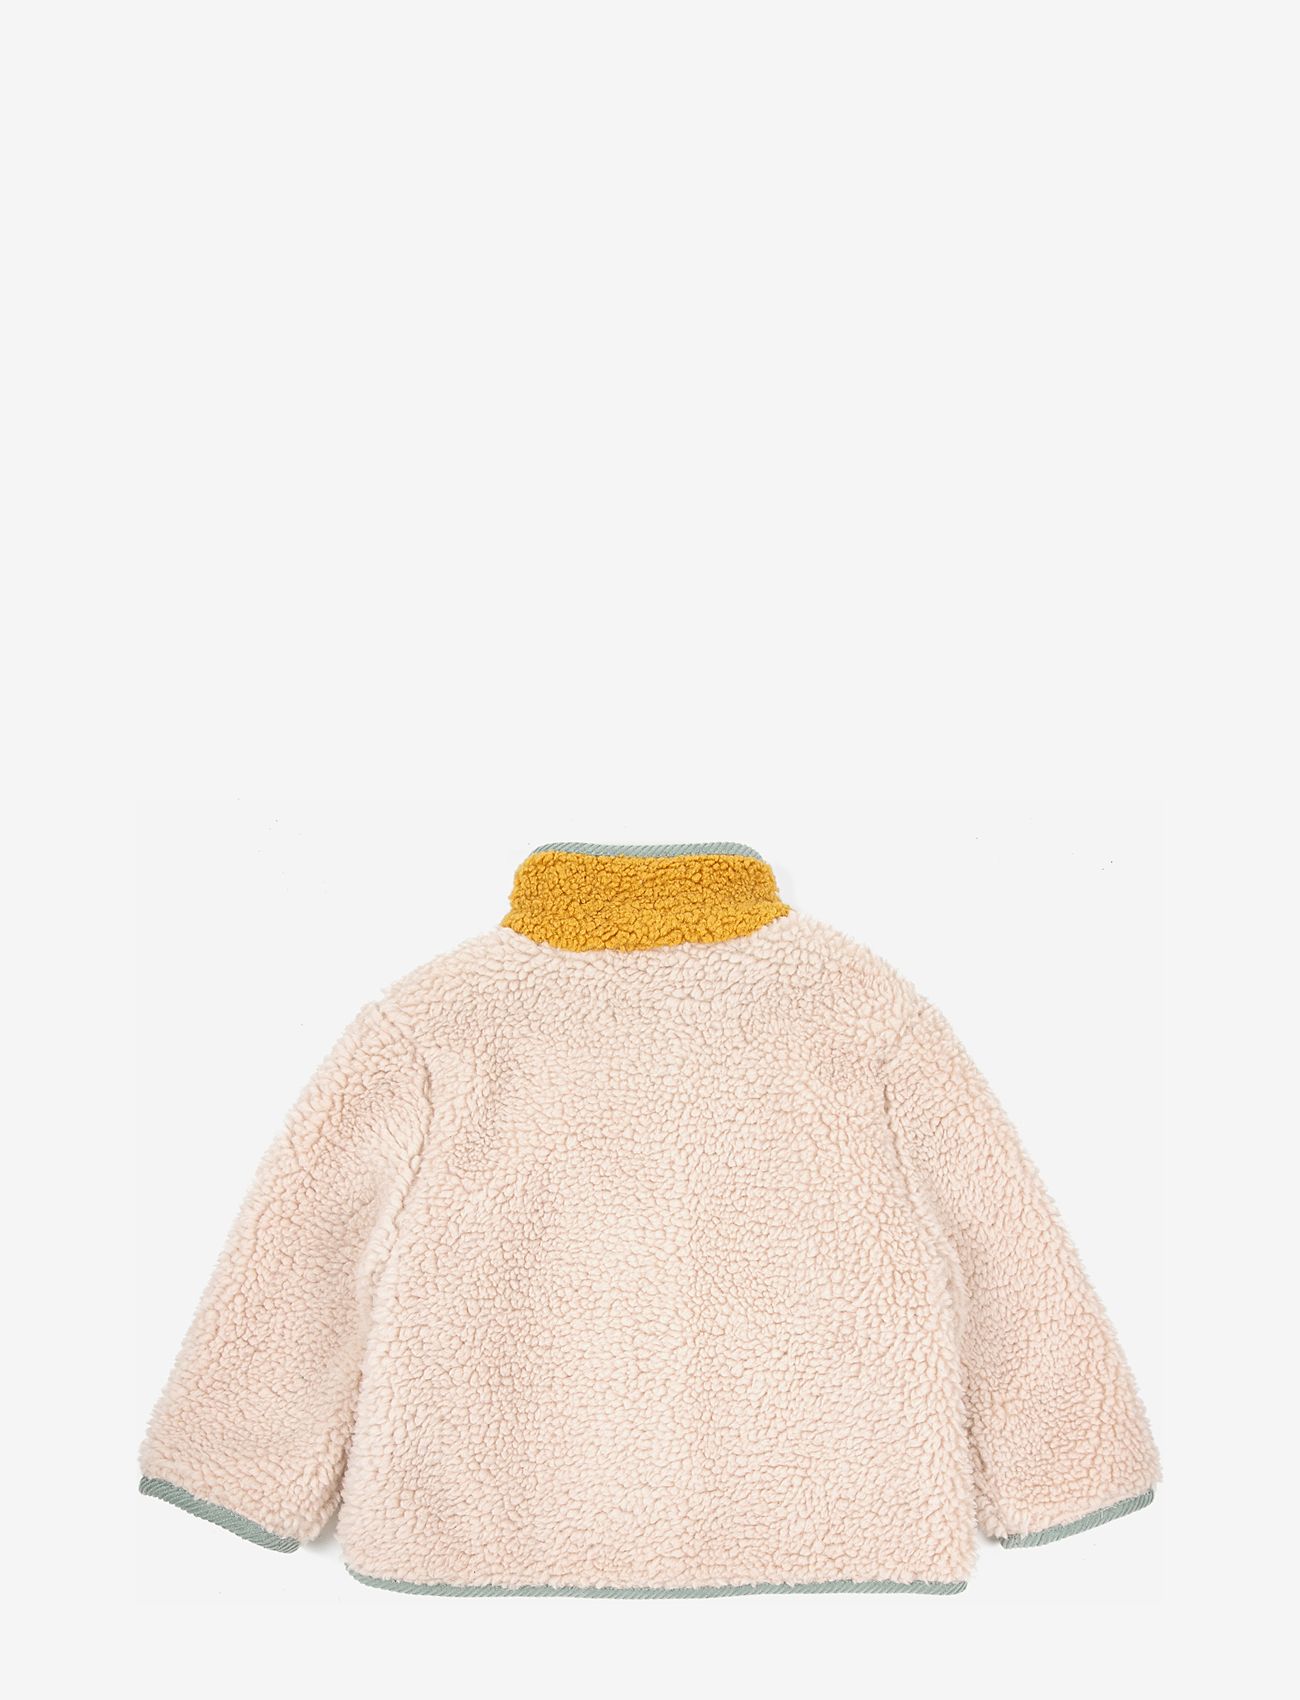 Bobo Choses - Baby Color Block sheepskin jacket - fleece jacket - beige - 1